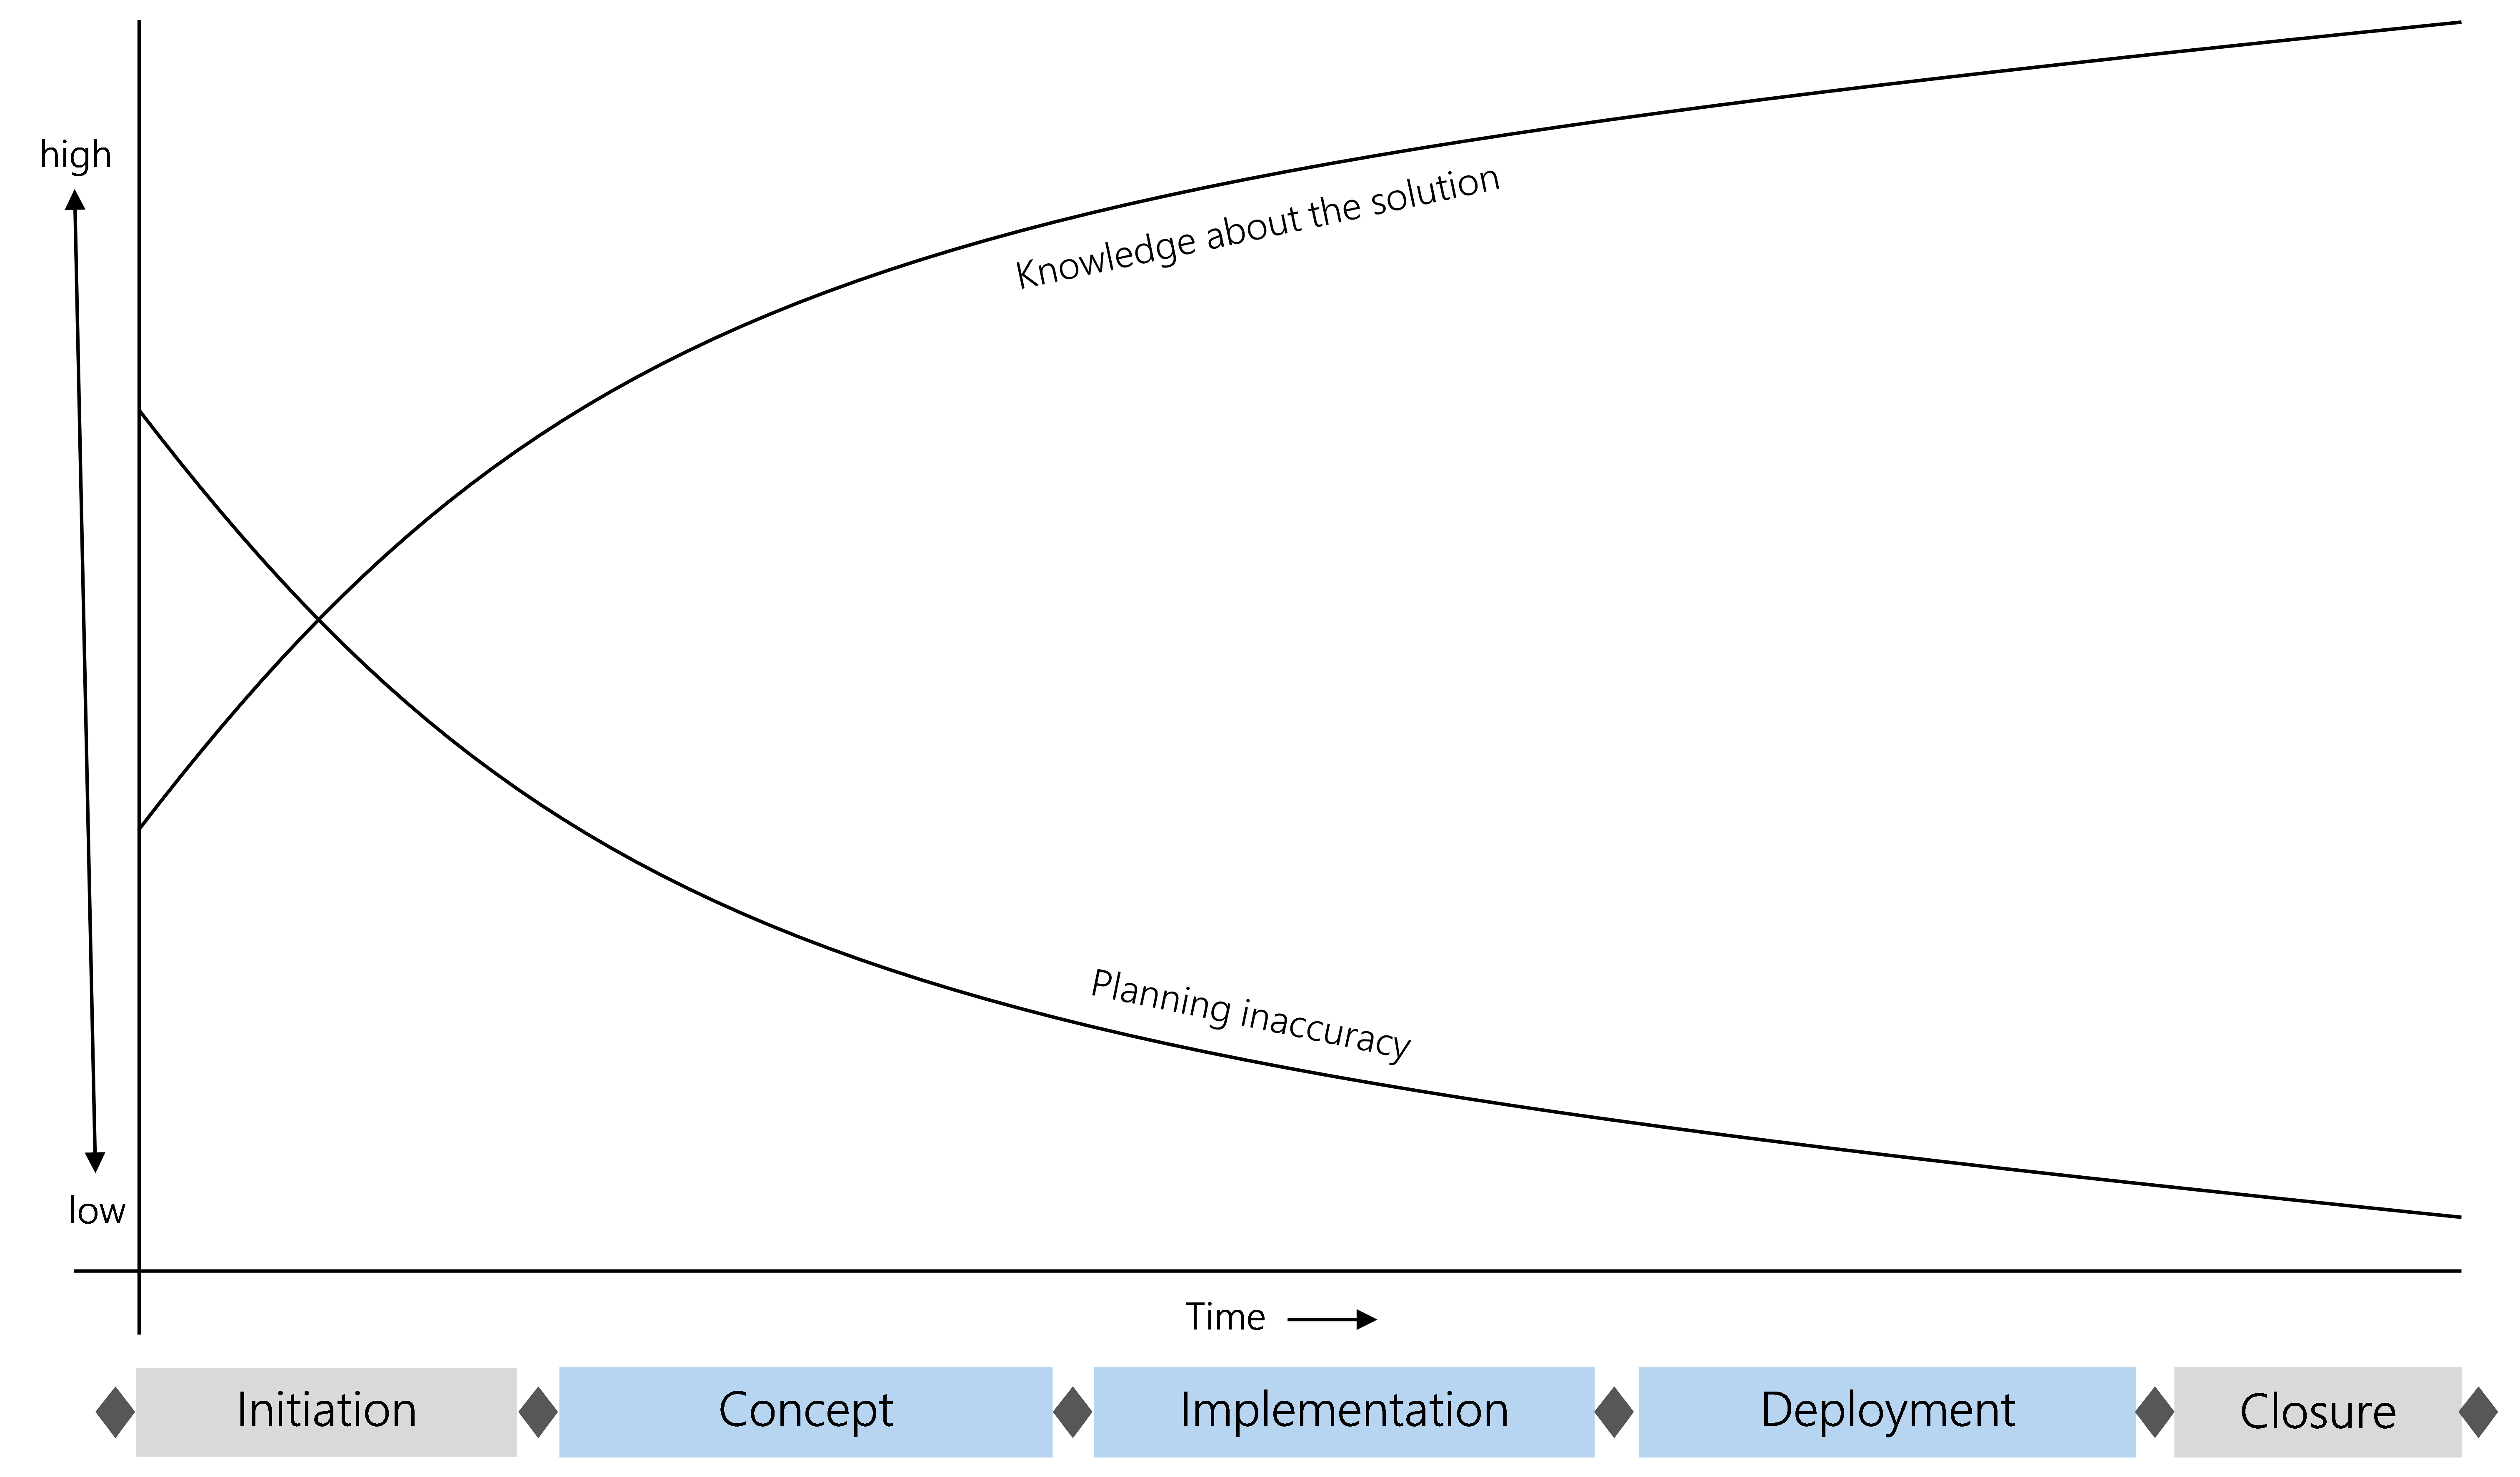 Figure 35: Increasing knowledge/decreasing planning inaccuracy